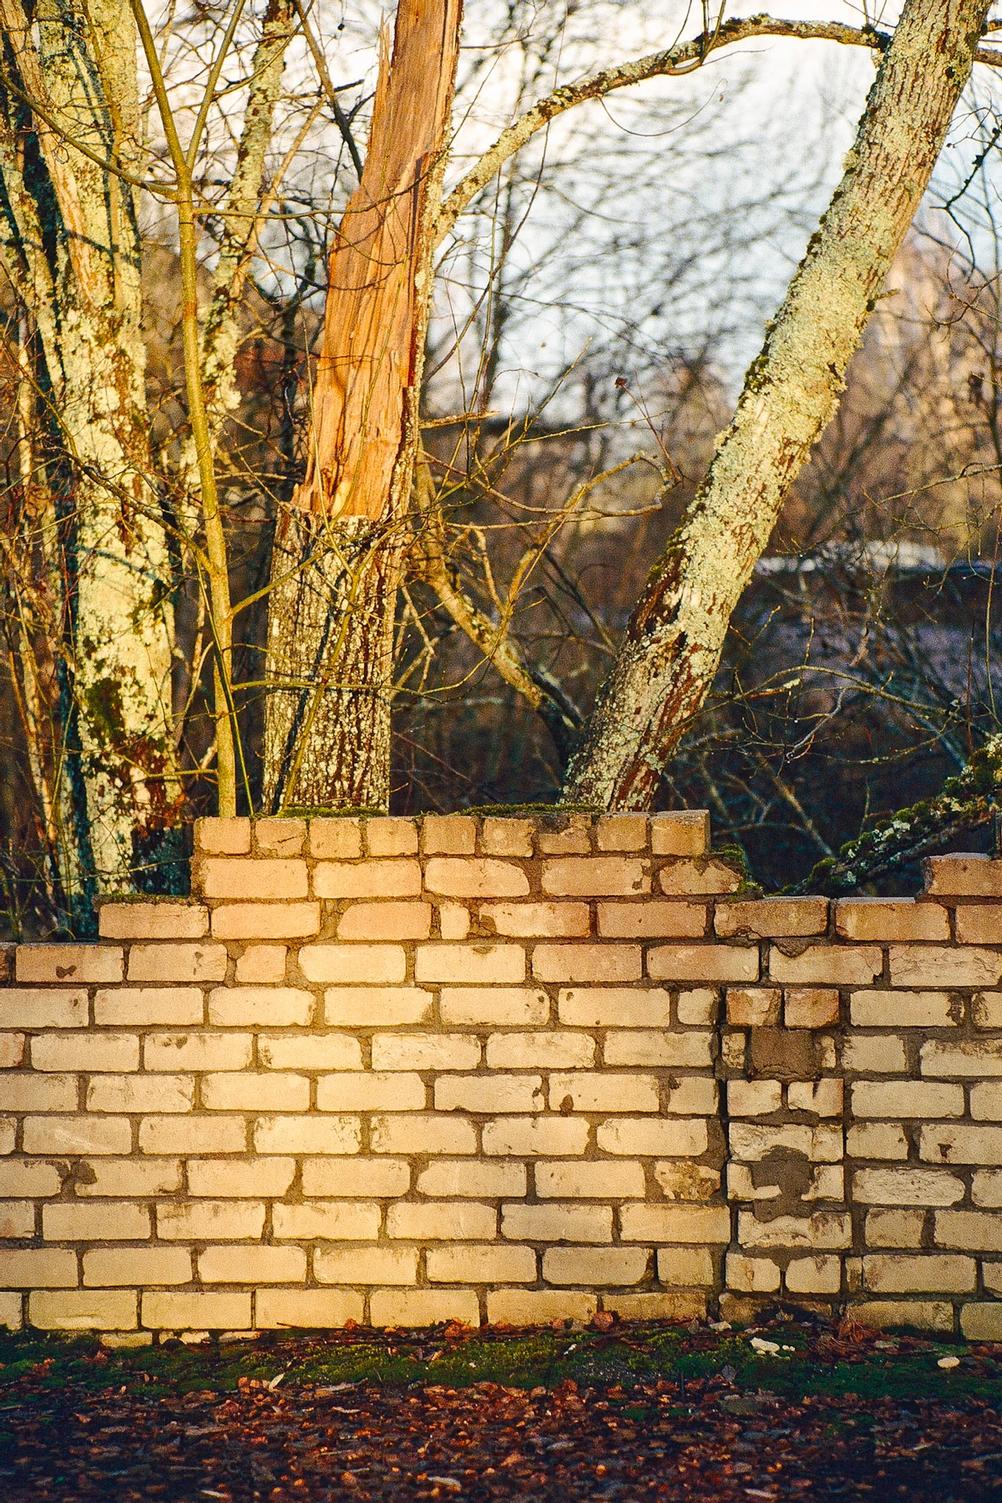 Sun shining on a brick wall.